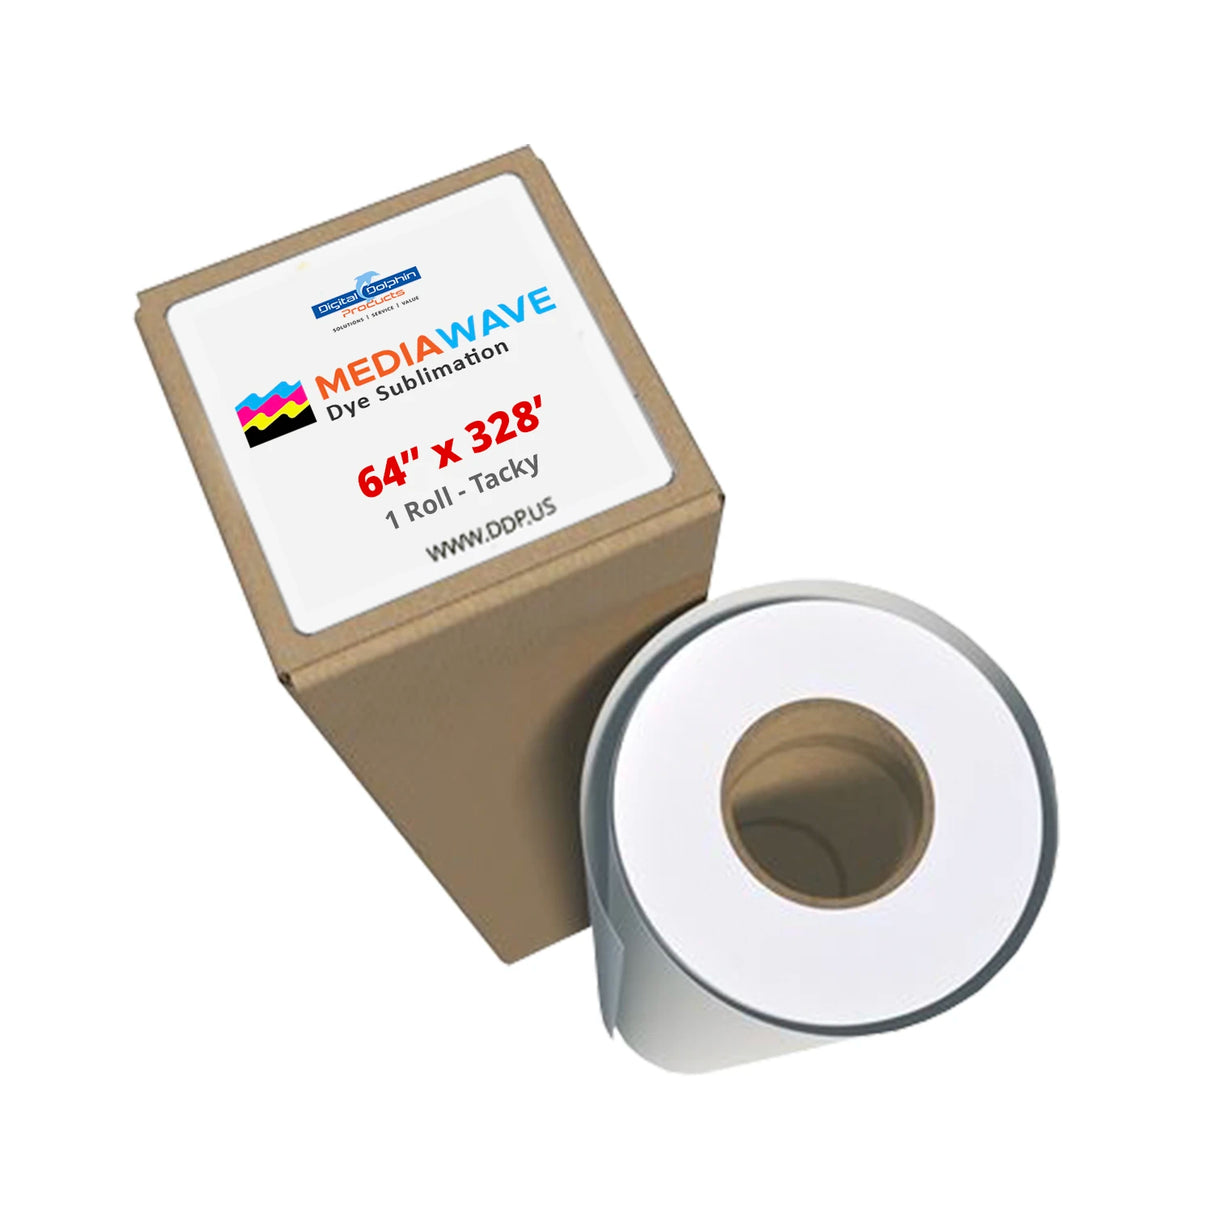 MediaWave Tacky Dye Sublimation Paper 64"x328' Roll